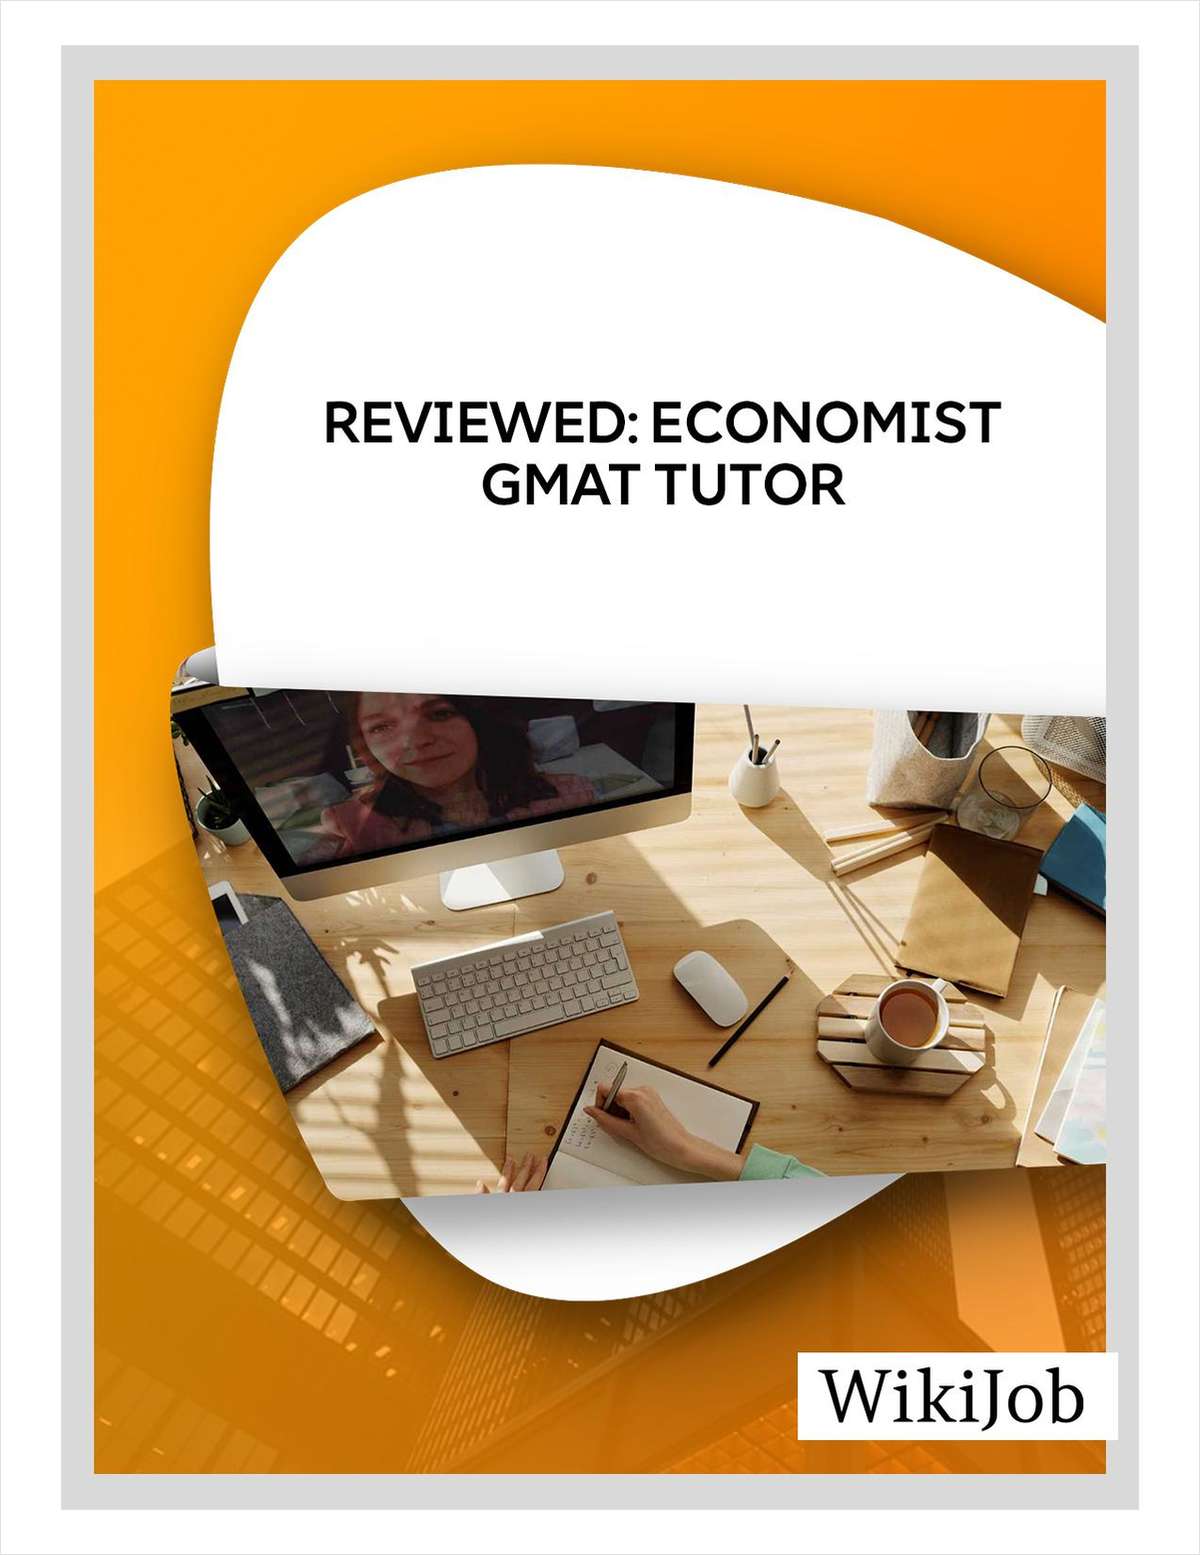 Reviewed: Economist GMAT Tutor